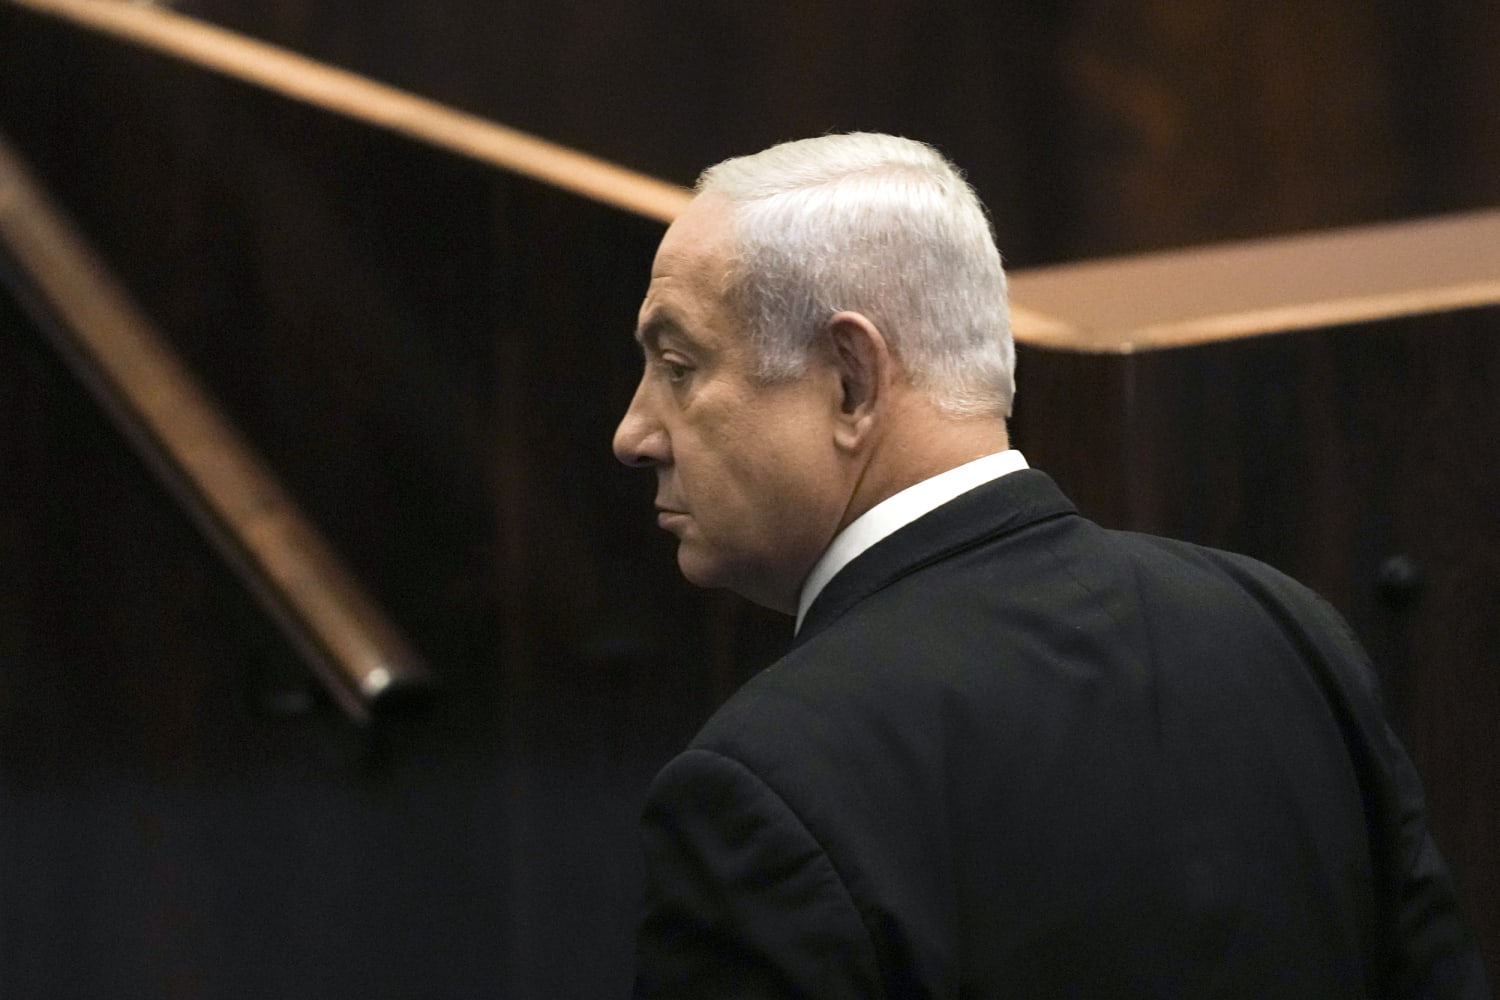 Israeli leaders lash out at Biden's criticism as judicial overhaul plan sparks a rare public rift